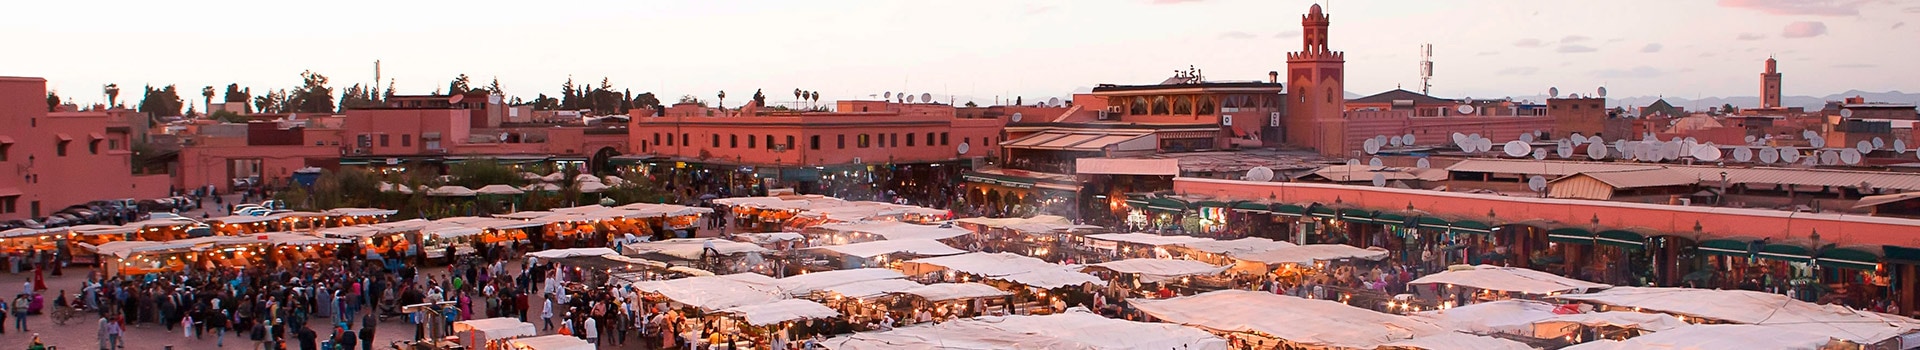 Genoa - Marrakech